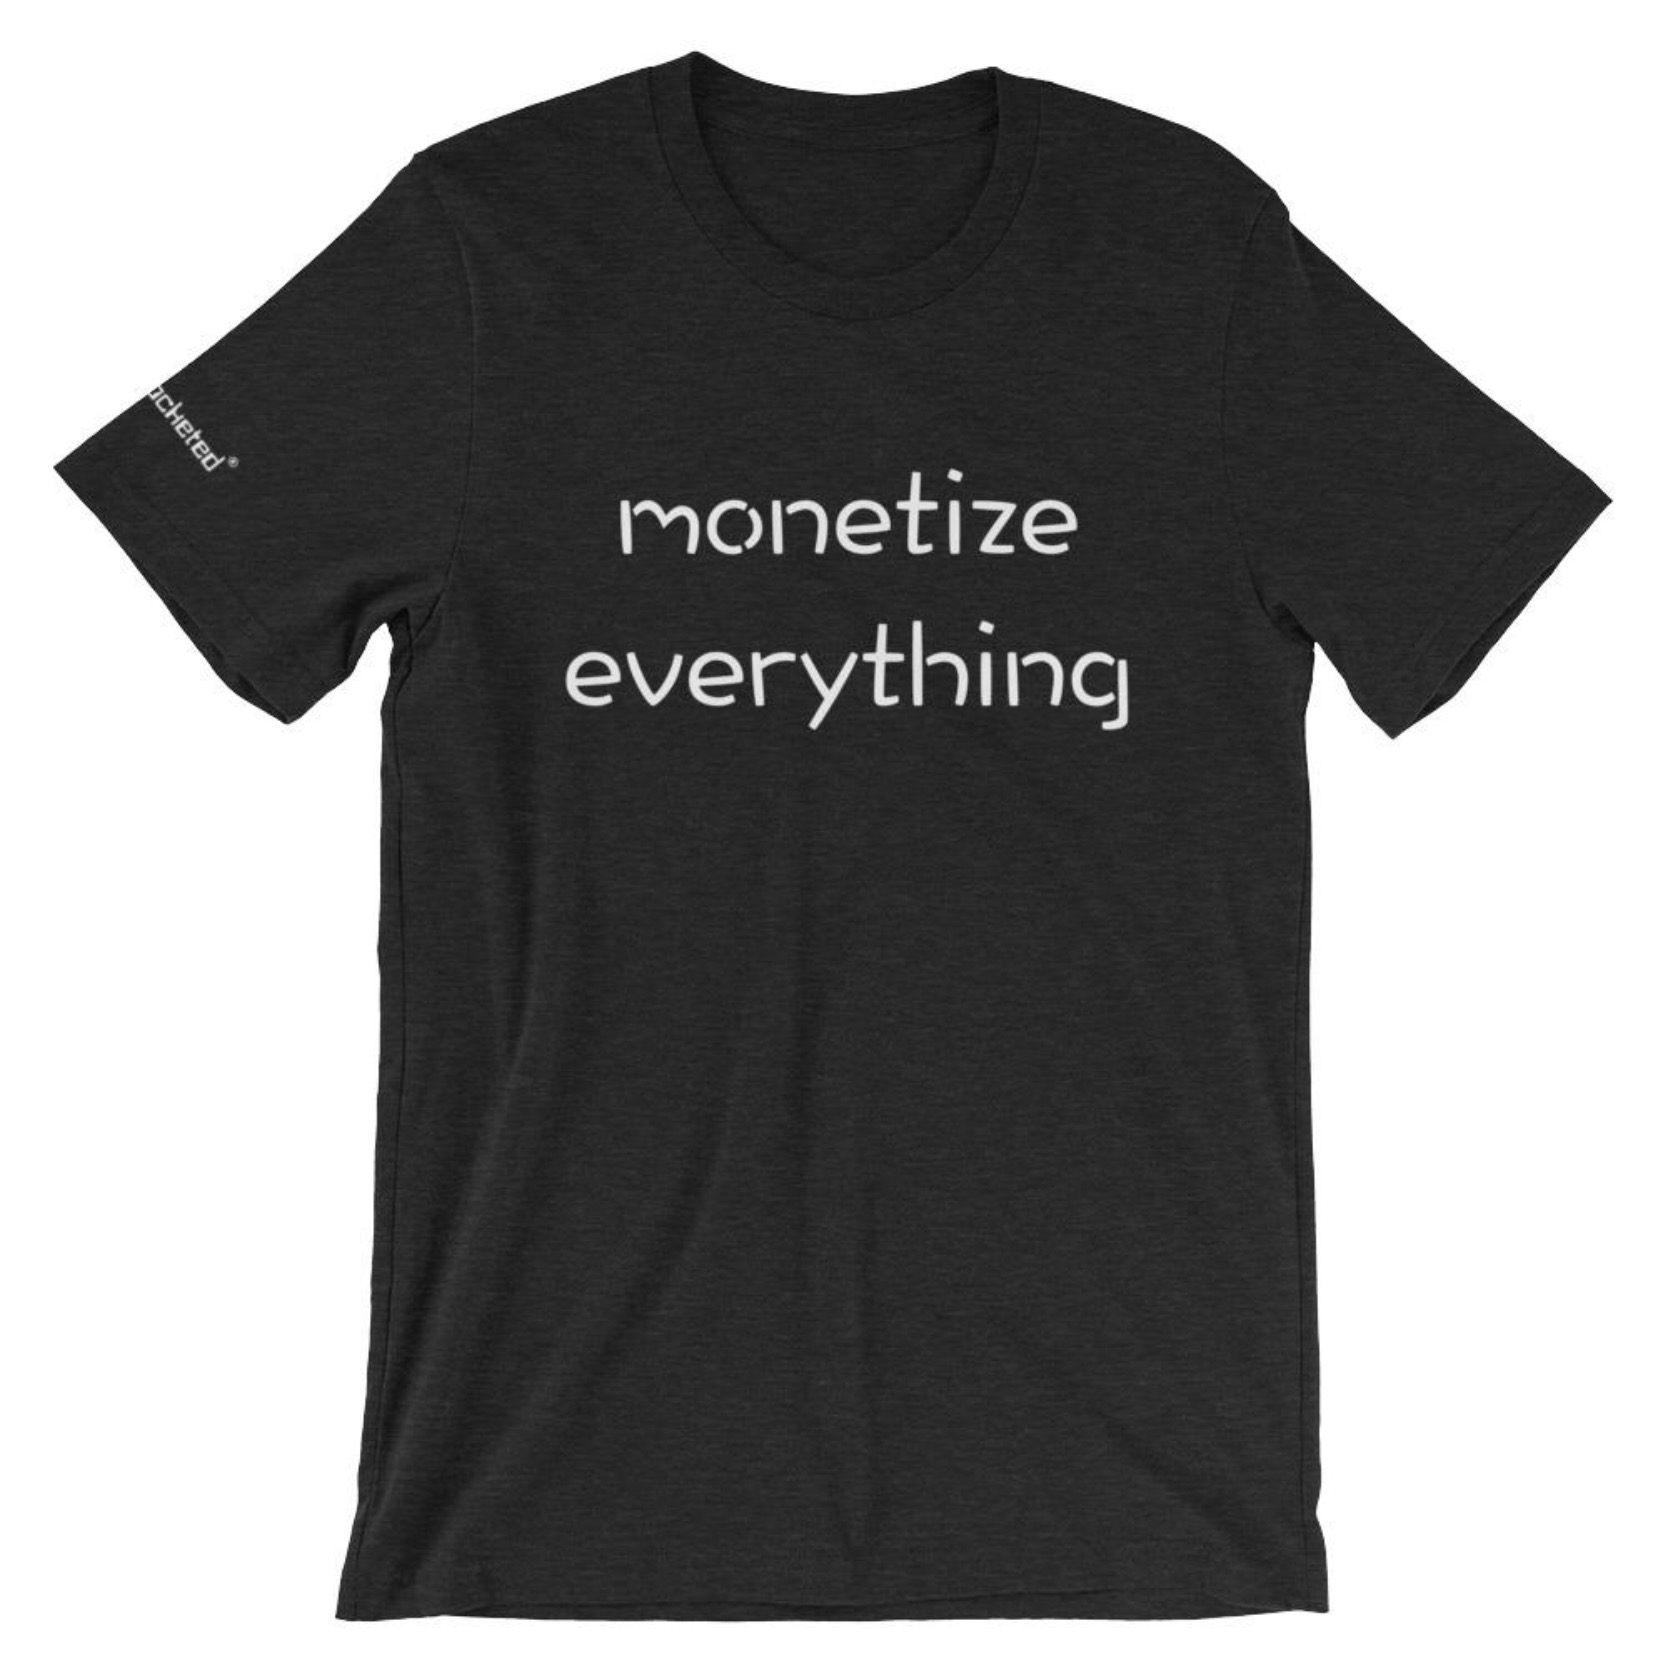 Life Rocketed monetize everything shirt